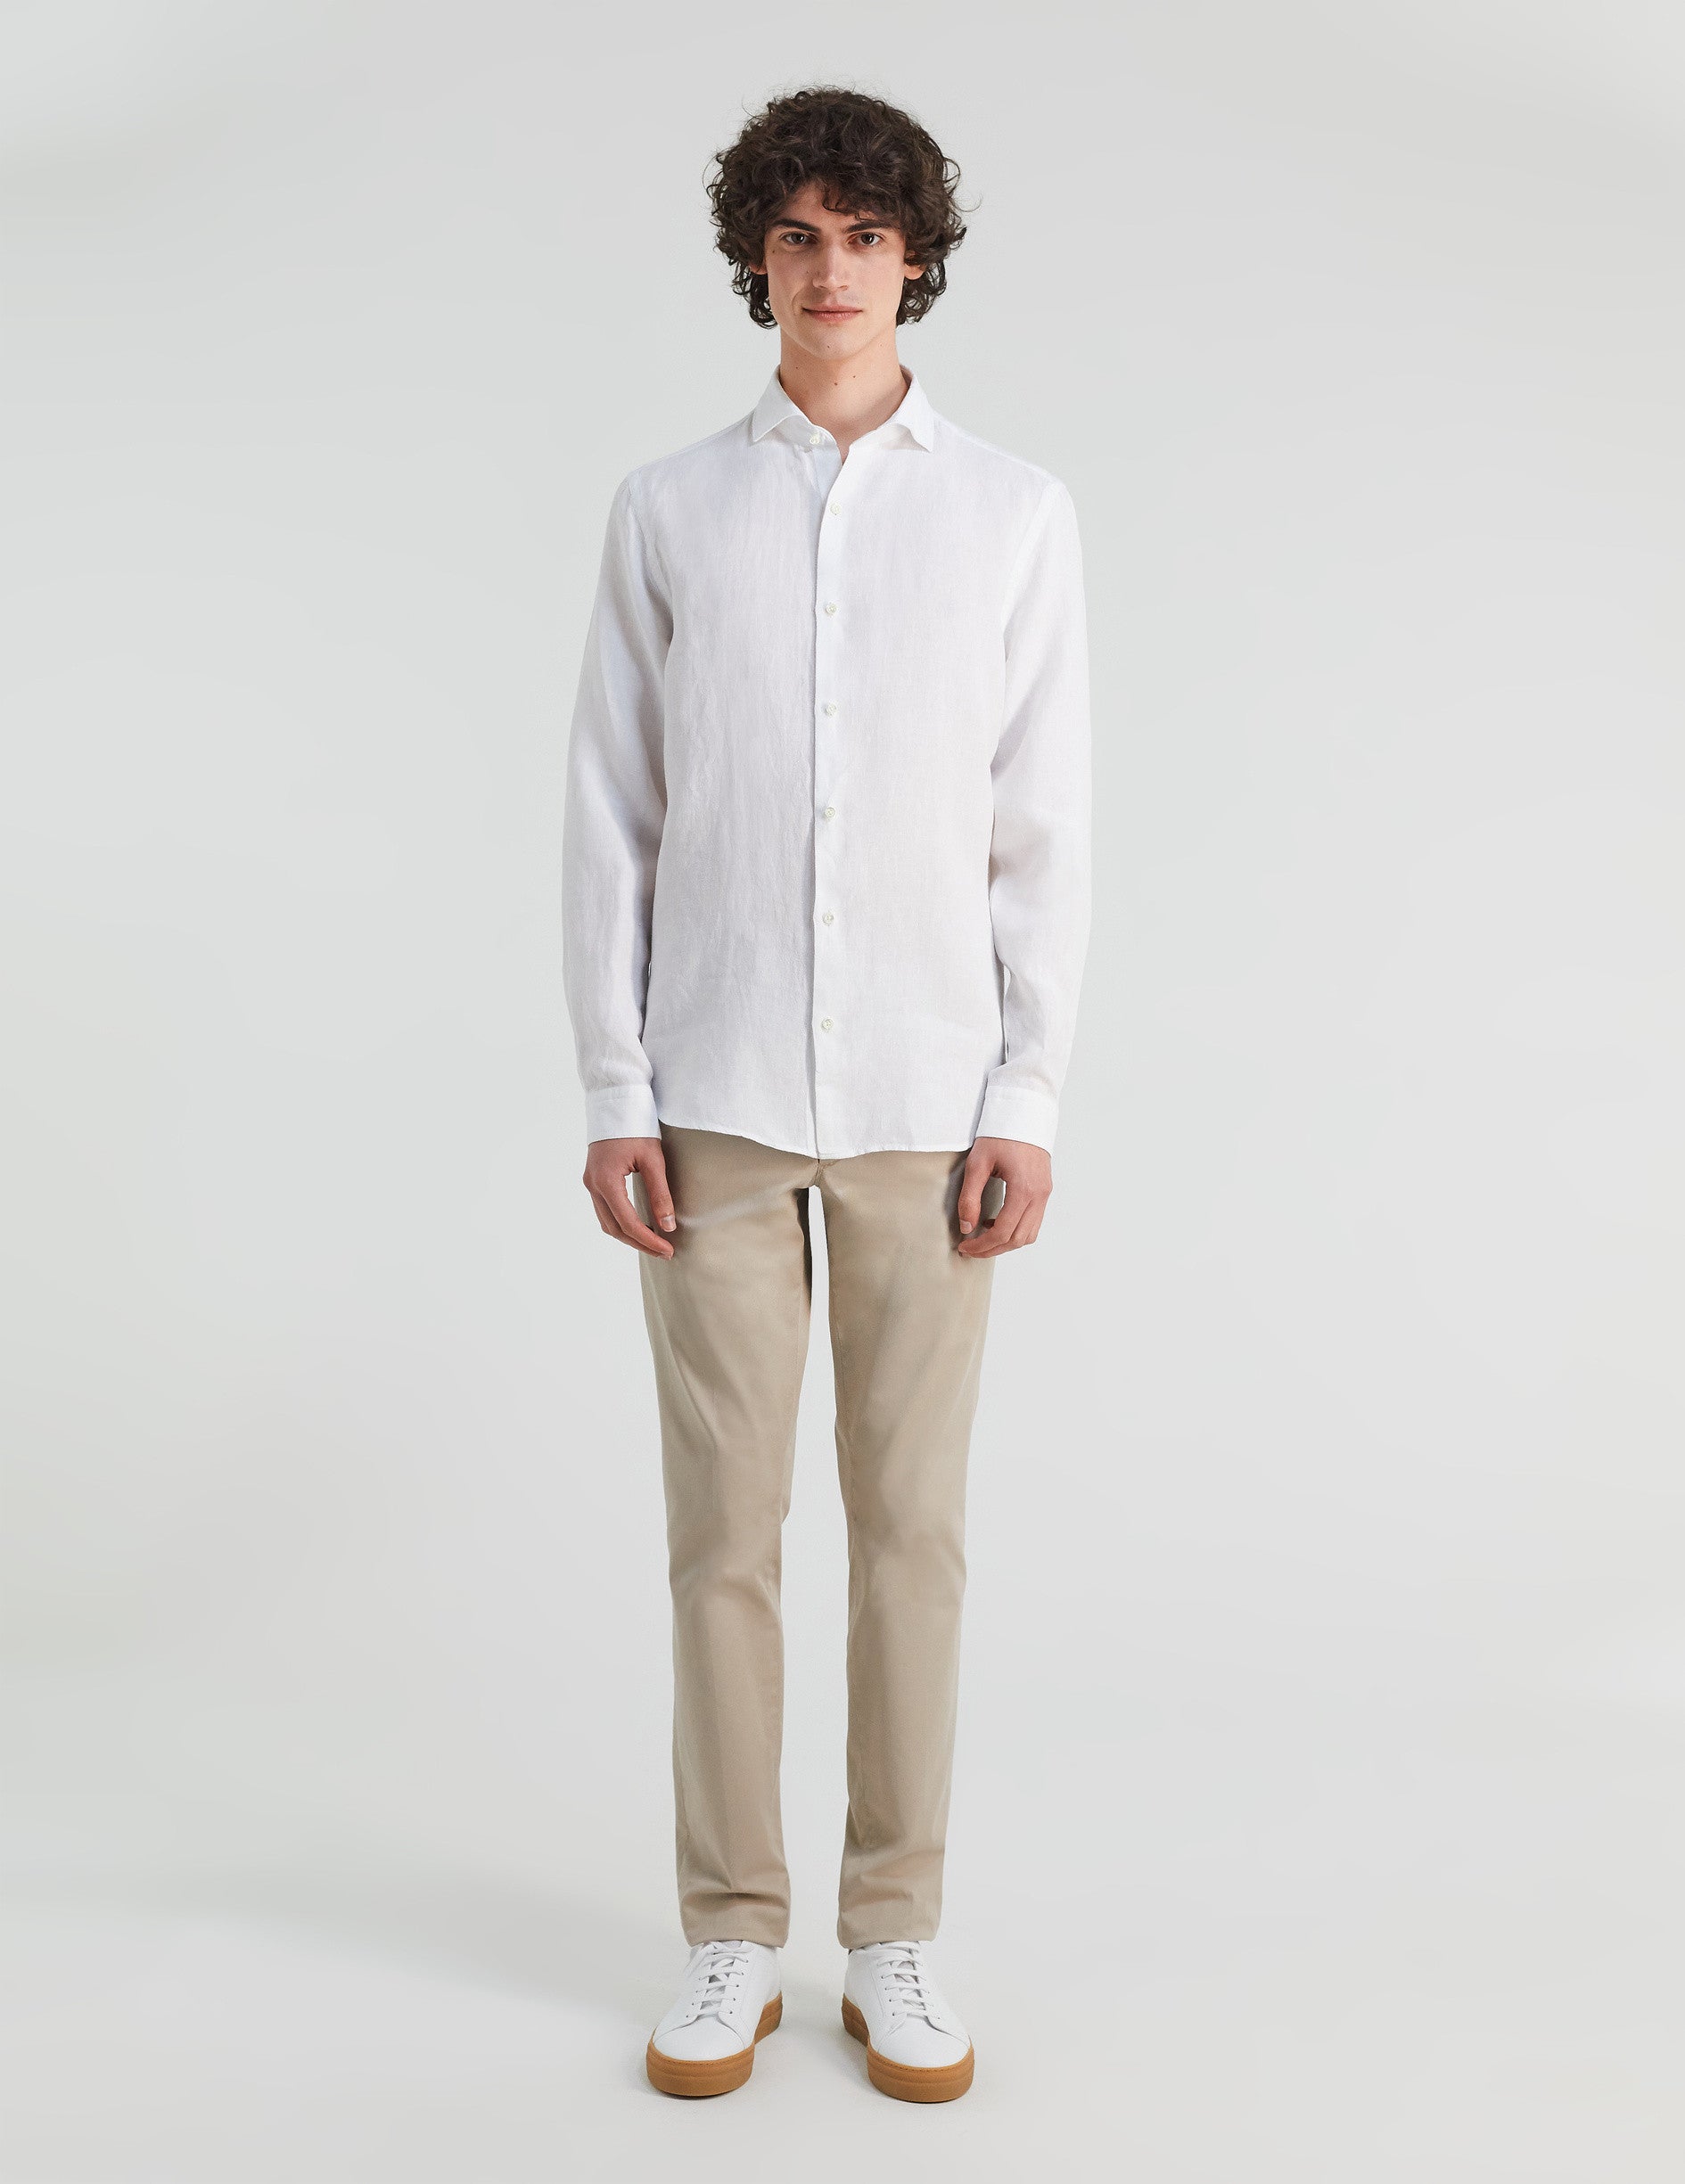 Aristote shirt in white linen - Linen - Italian Collar